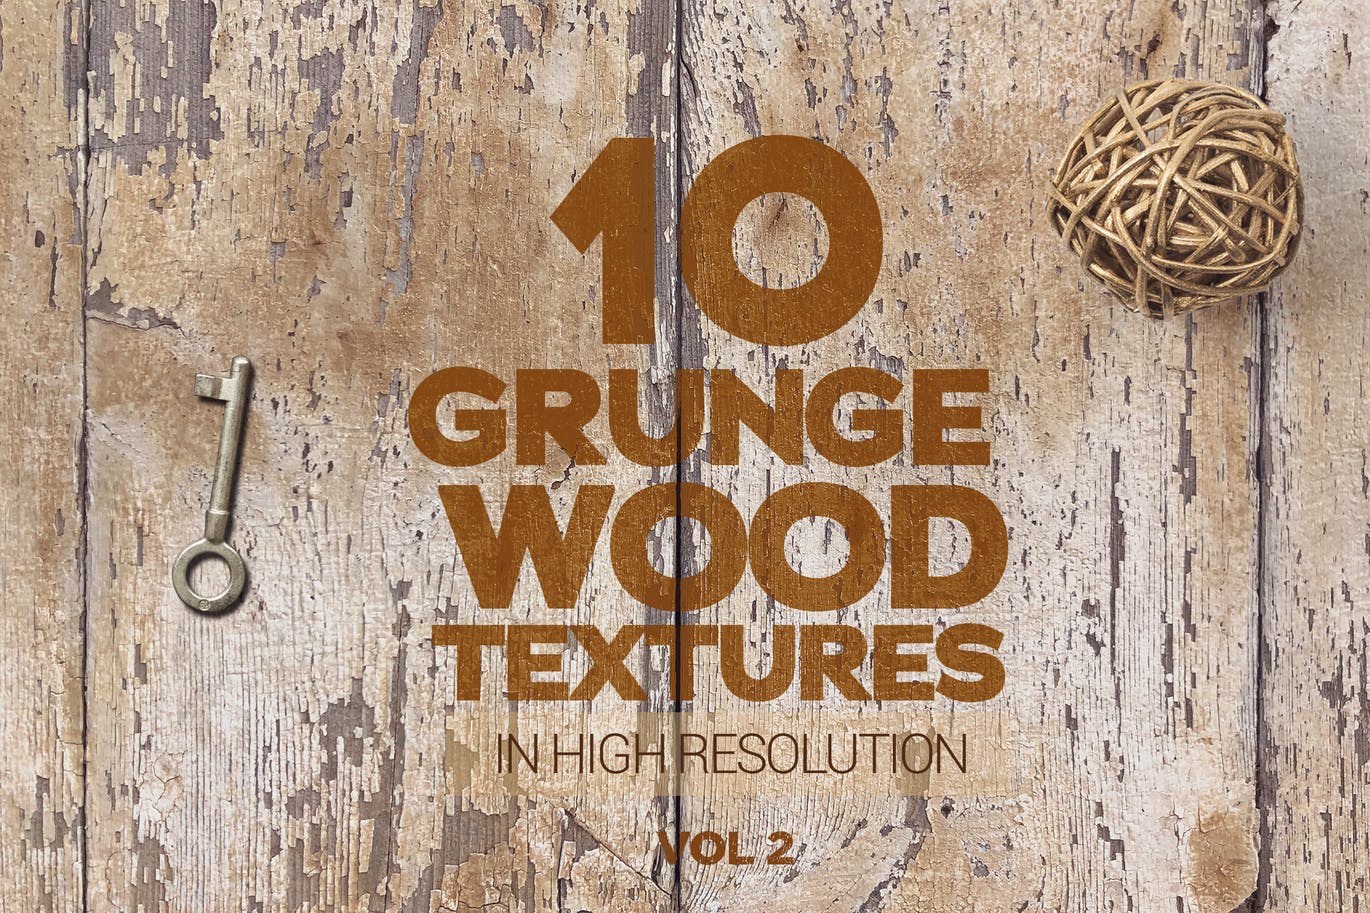 Ten grunge wood textures pack